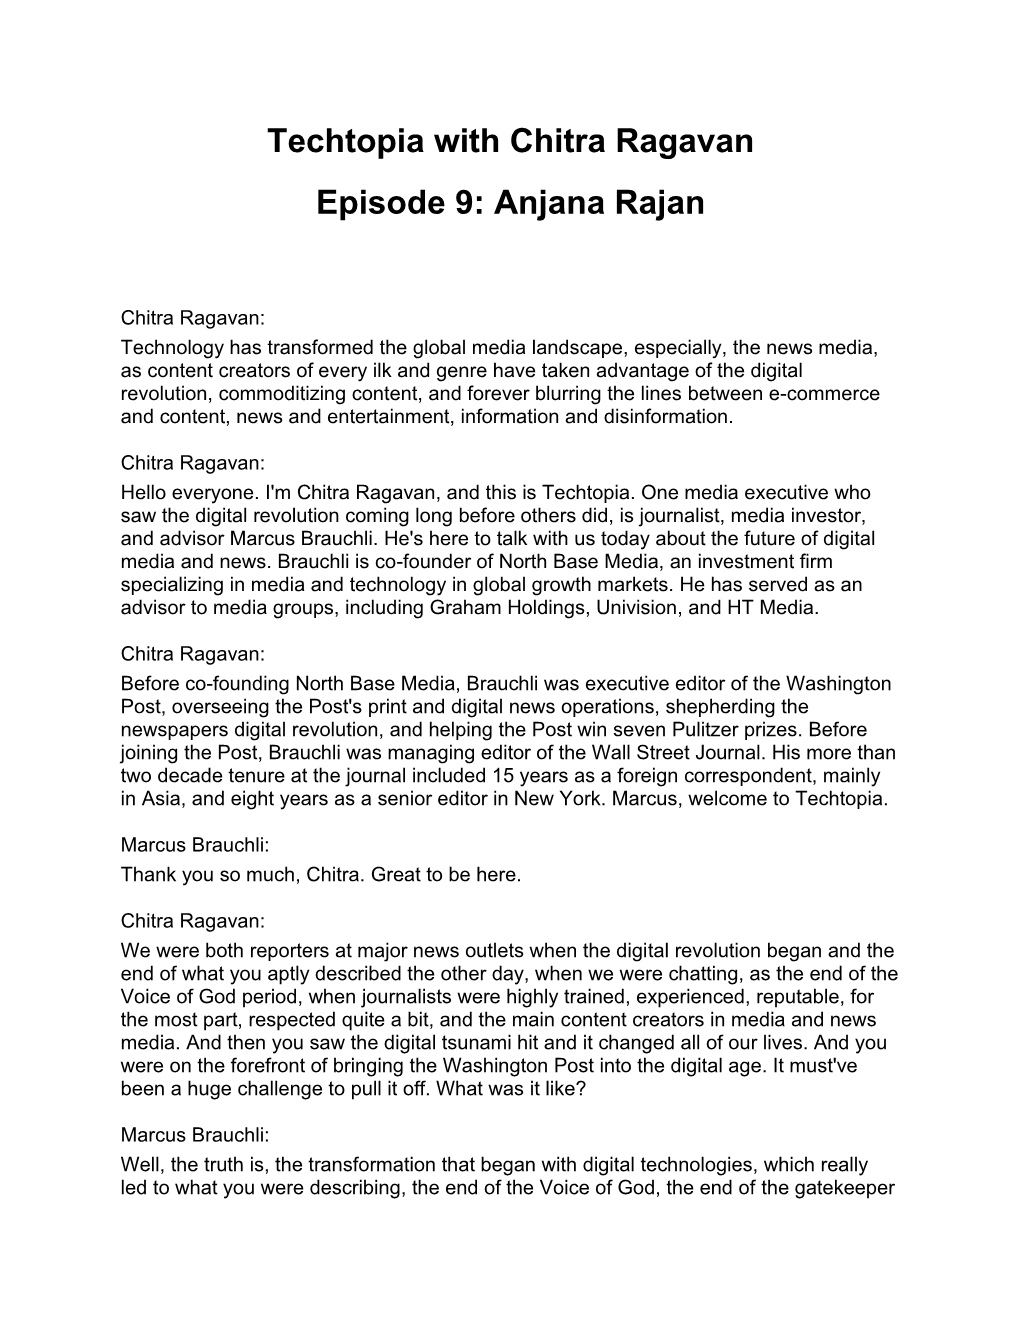 Techtopia with Chitra Ragavan Episode 9: Anjana Rajan